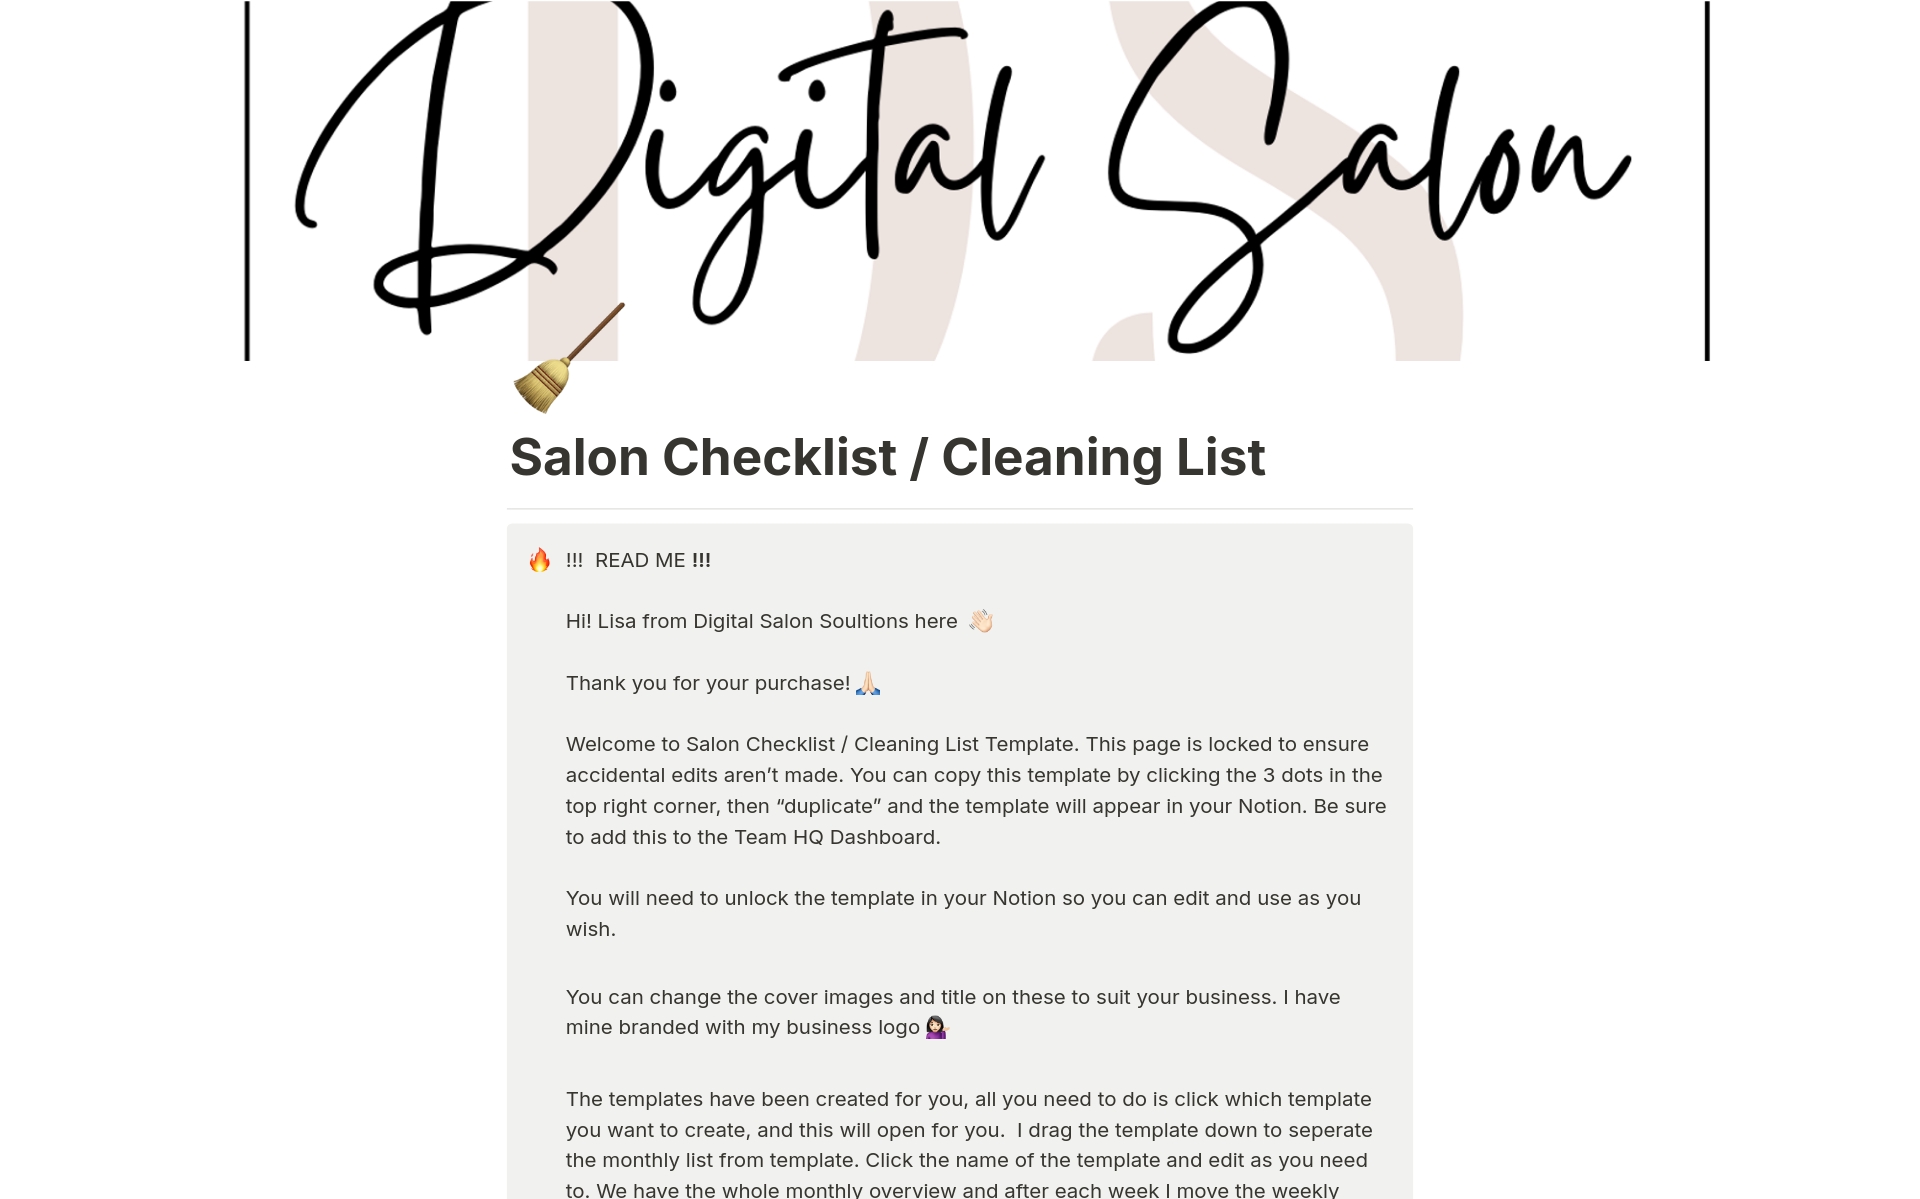 Salon Checklist / Cleaning List님의 템플릿 미리보기